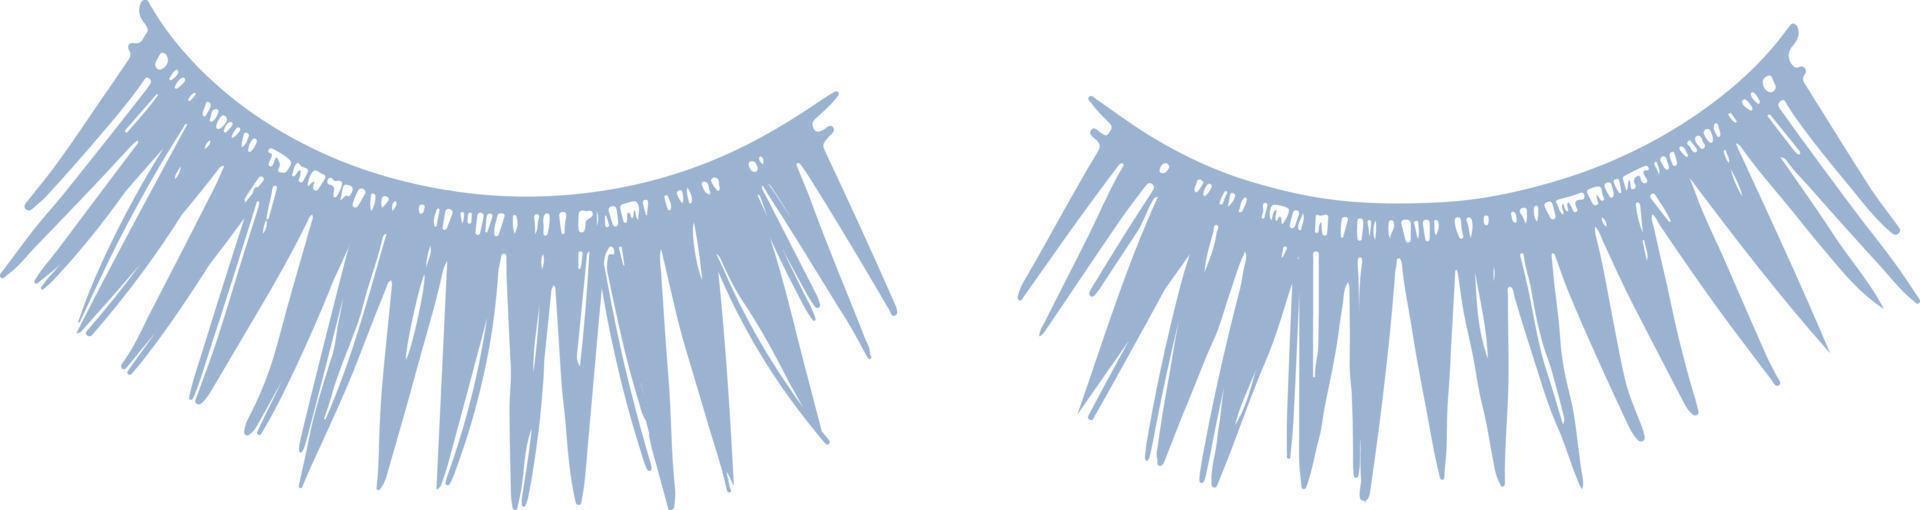 ilustración de extensión de pestañas vector